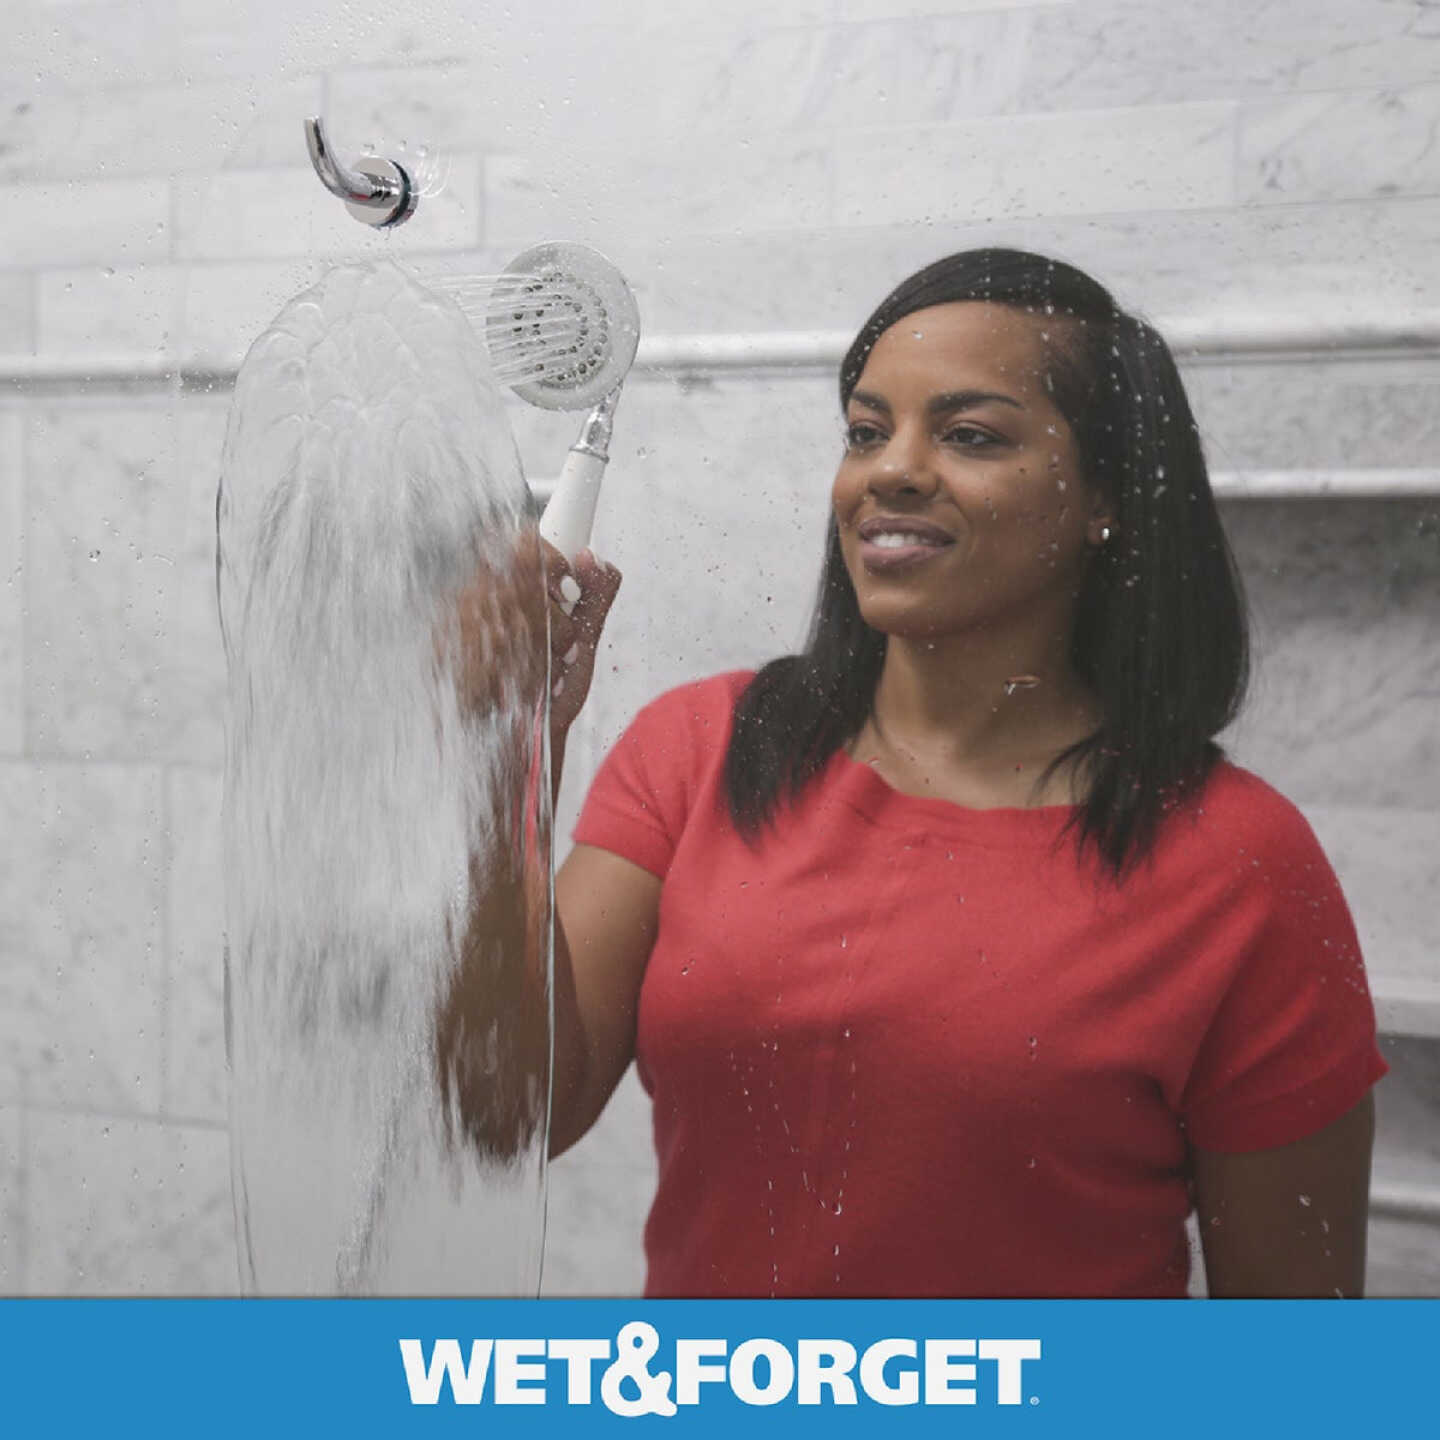 Wet & Forget 64 Oz. Fresh Scent Weekly Shower Cleaner - PICK & SHOVEL